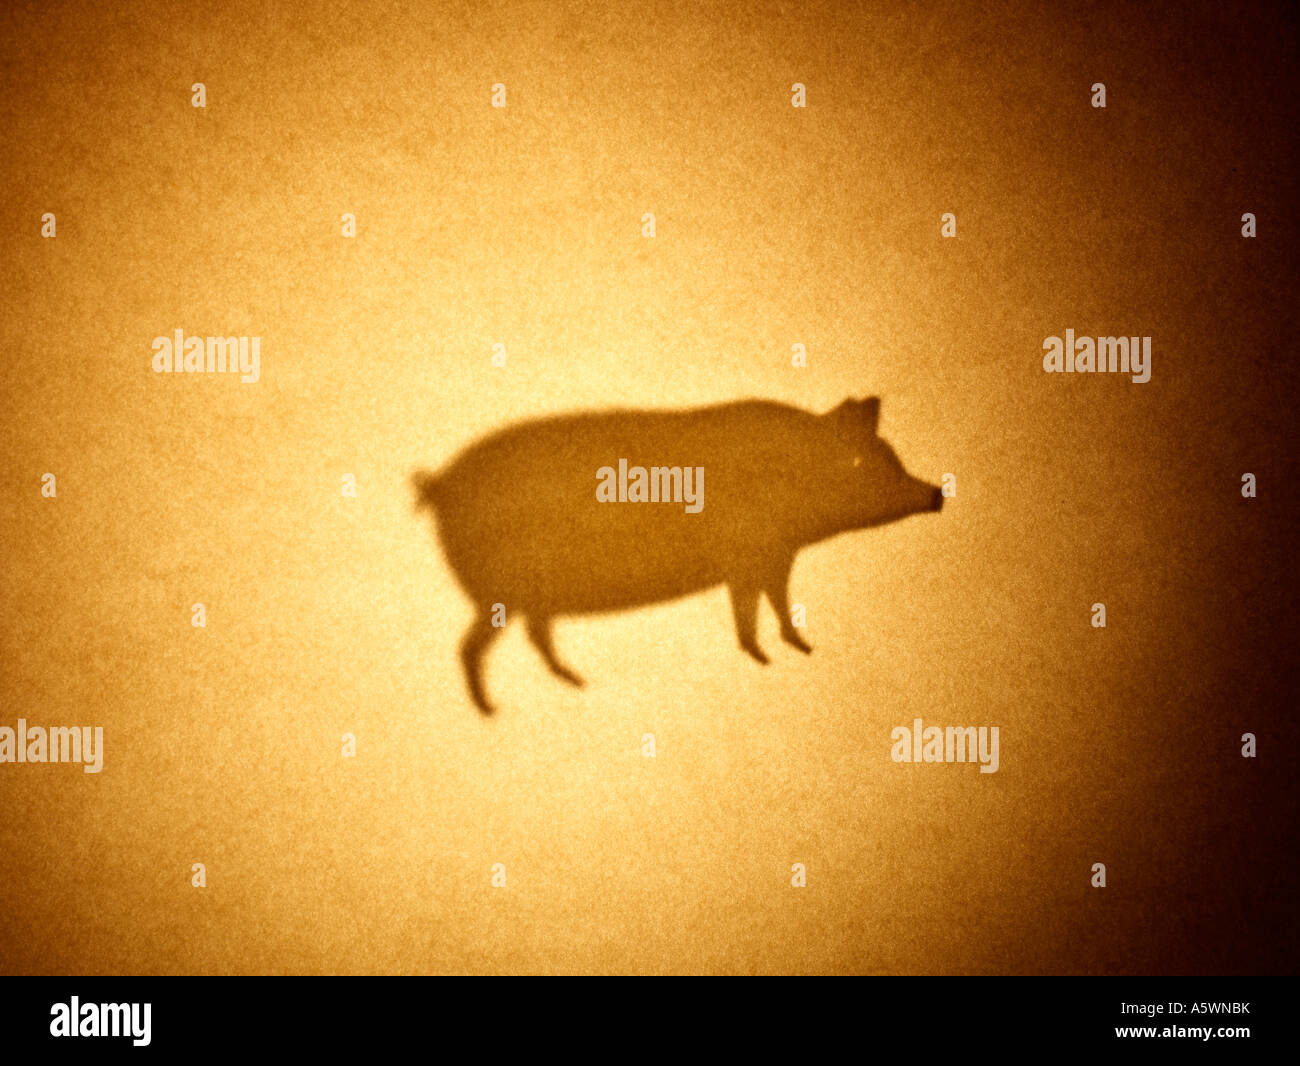 Pig silhouette Stock Photo